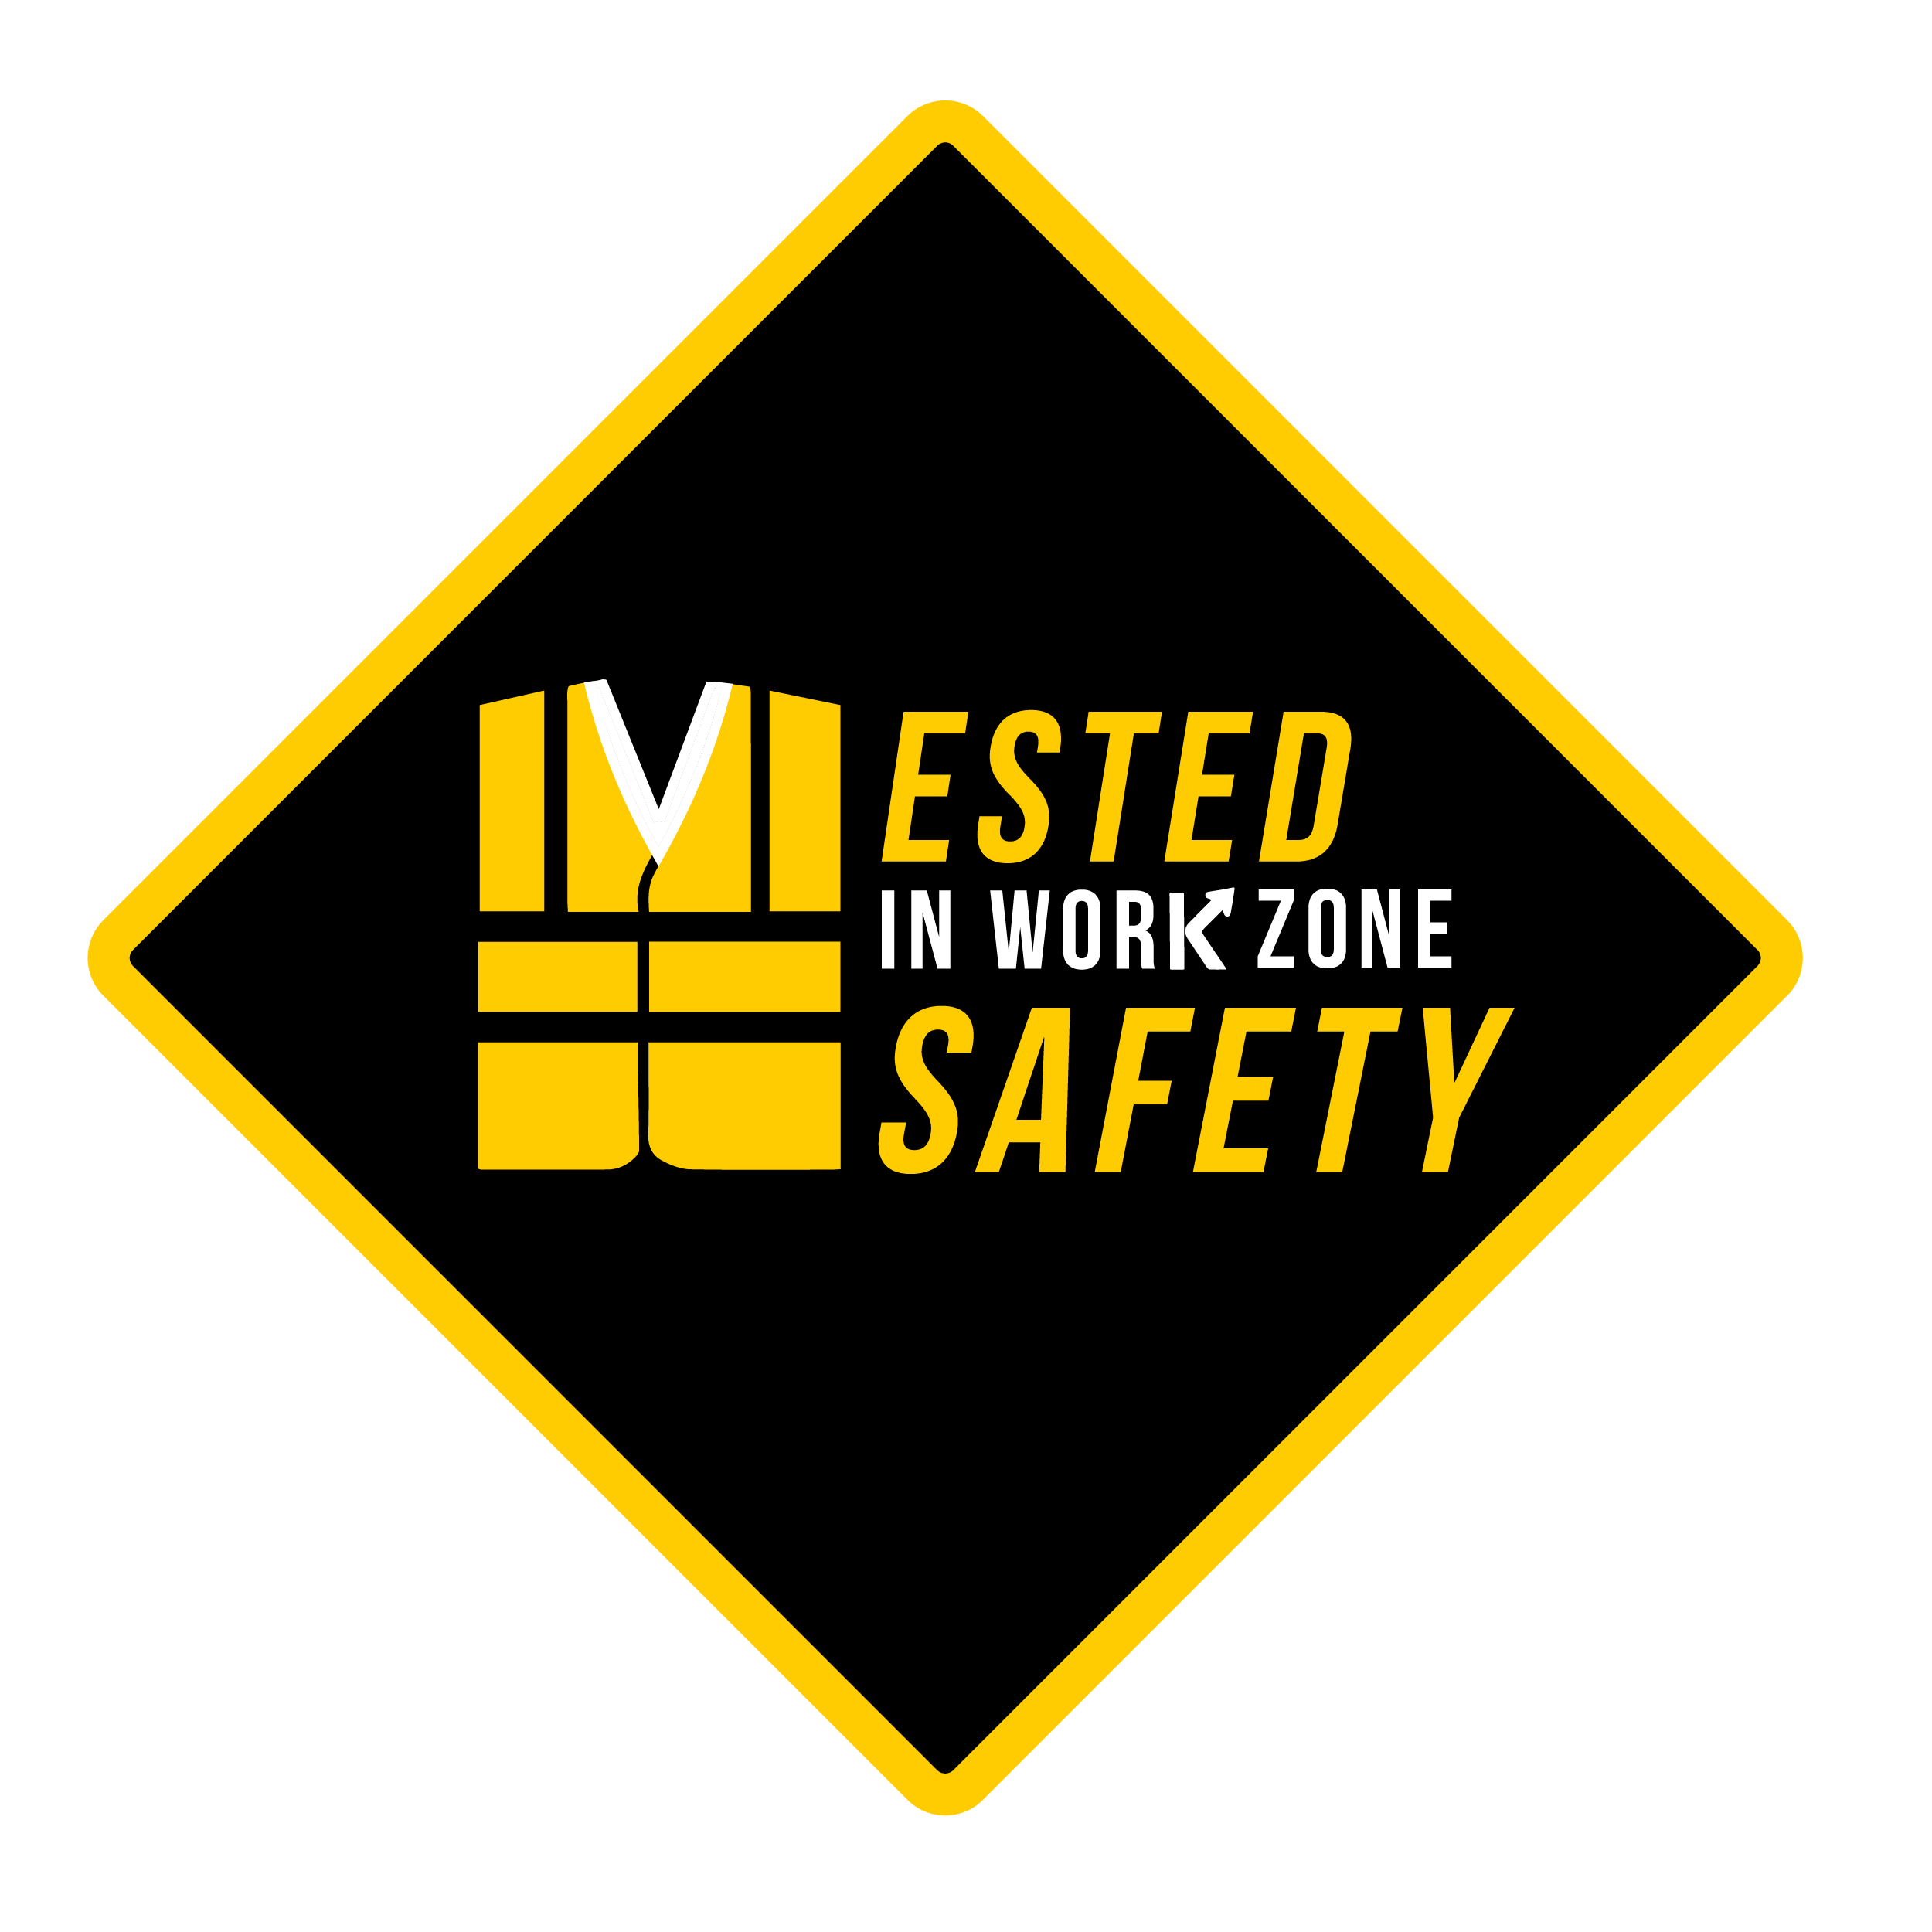 Vested_in_work_zone_safety_work_zone_safety_information